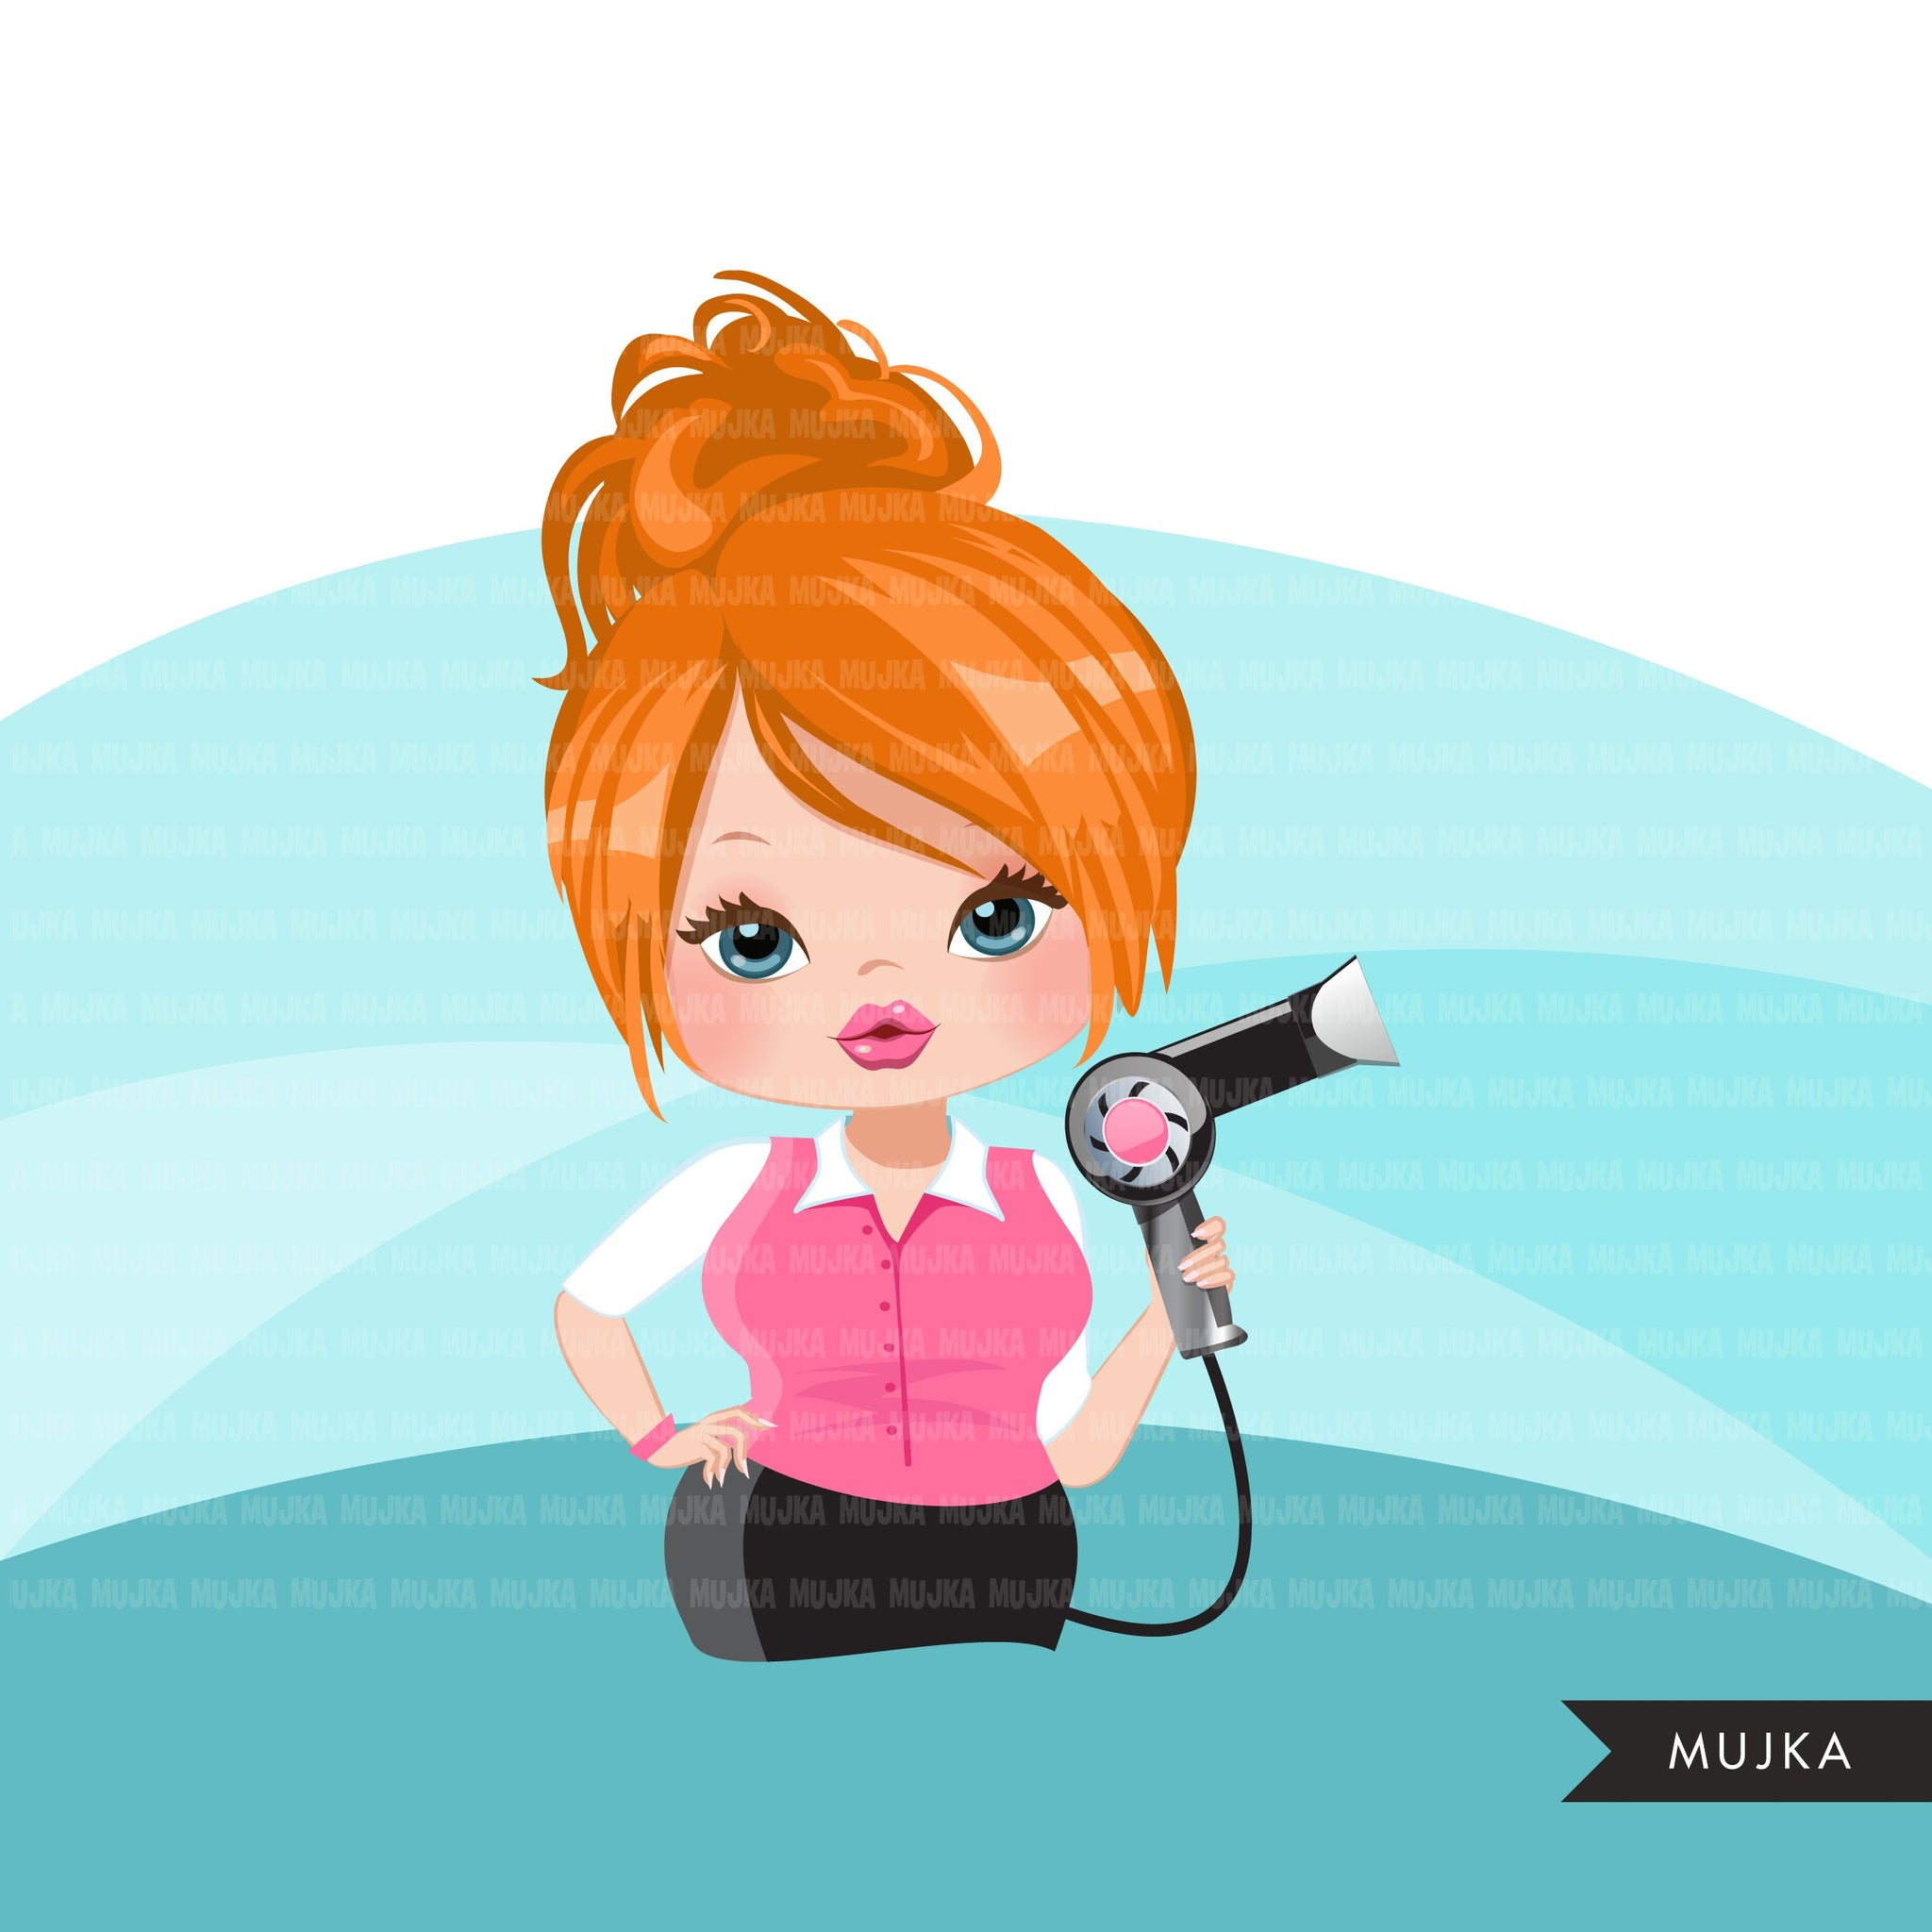 Hair stylist woman clipart avatar with hairdryer, print and cut, shop logo boss hairdresser clip art graphics